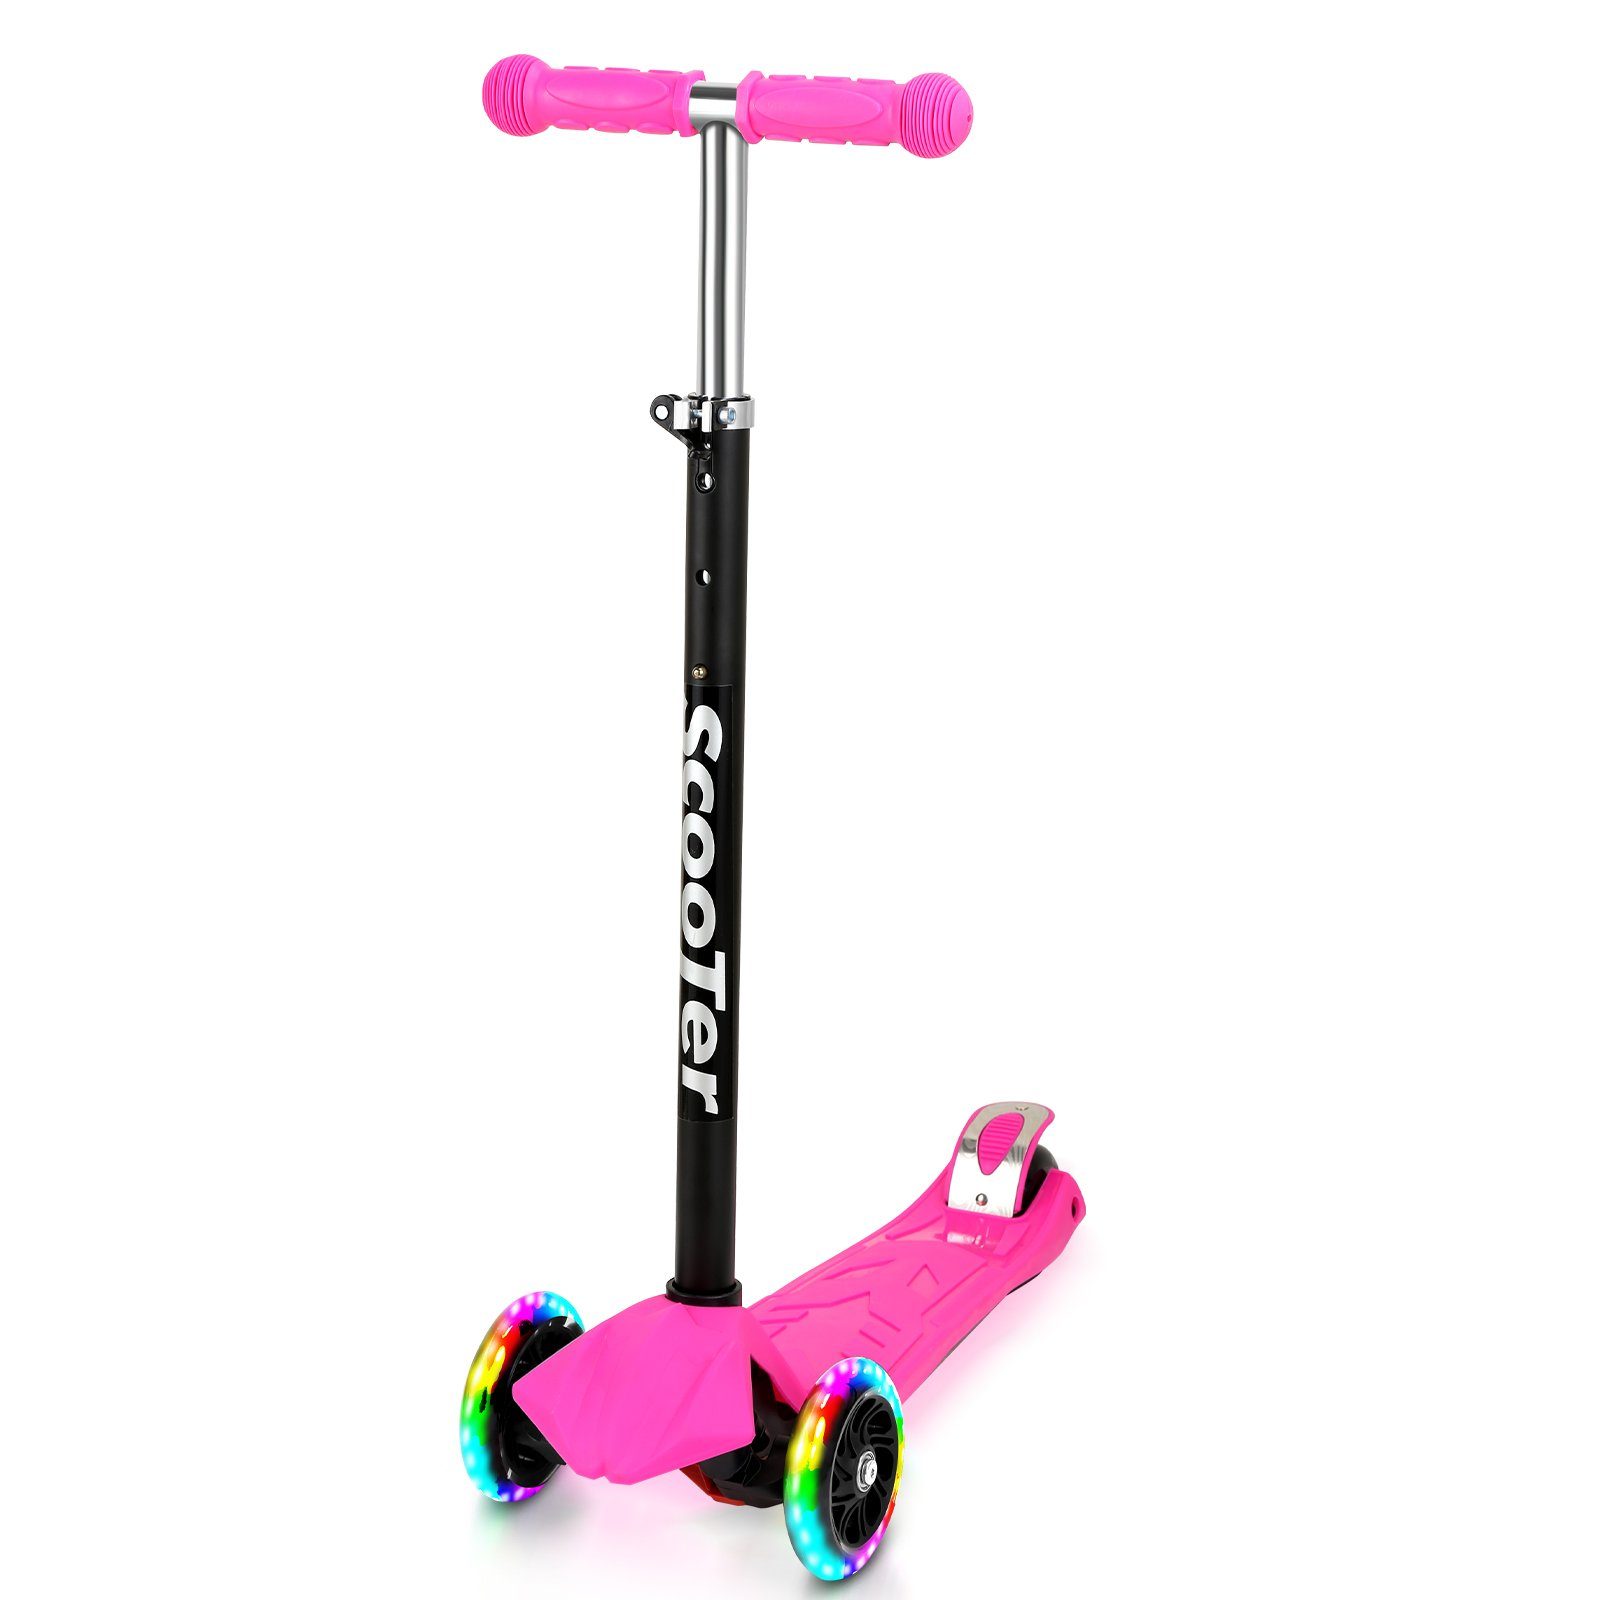 Gimisgu Scooter Kinderroller Tretroller Cityroller LED Räder Höhenverstellbar Rosa